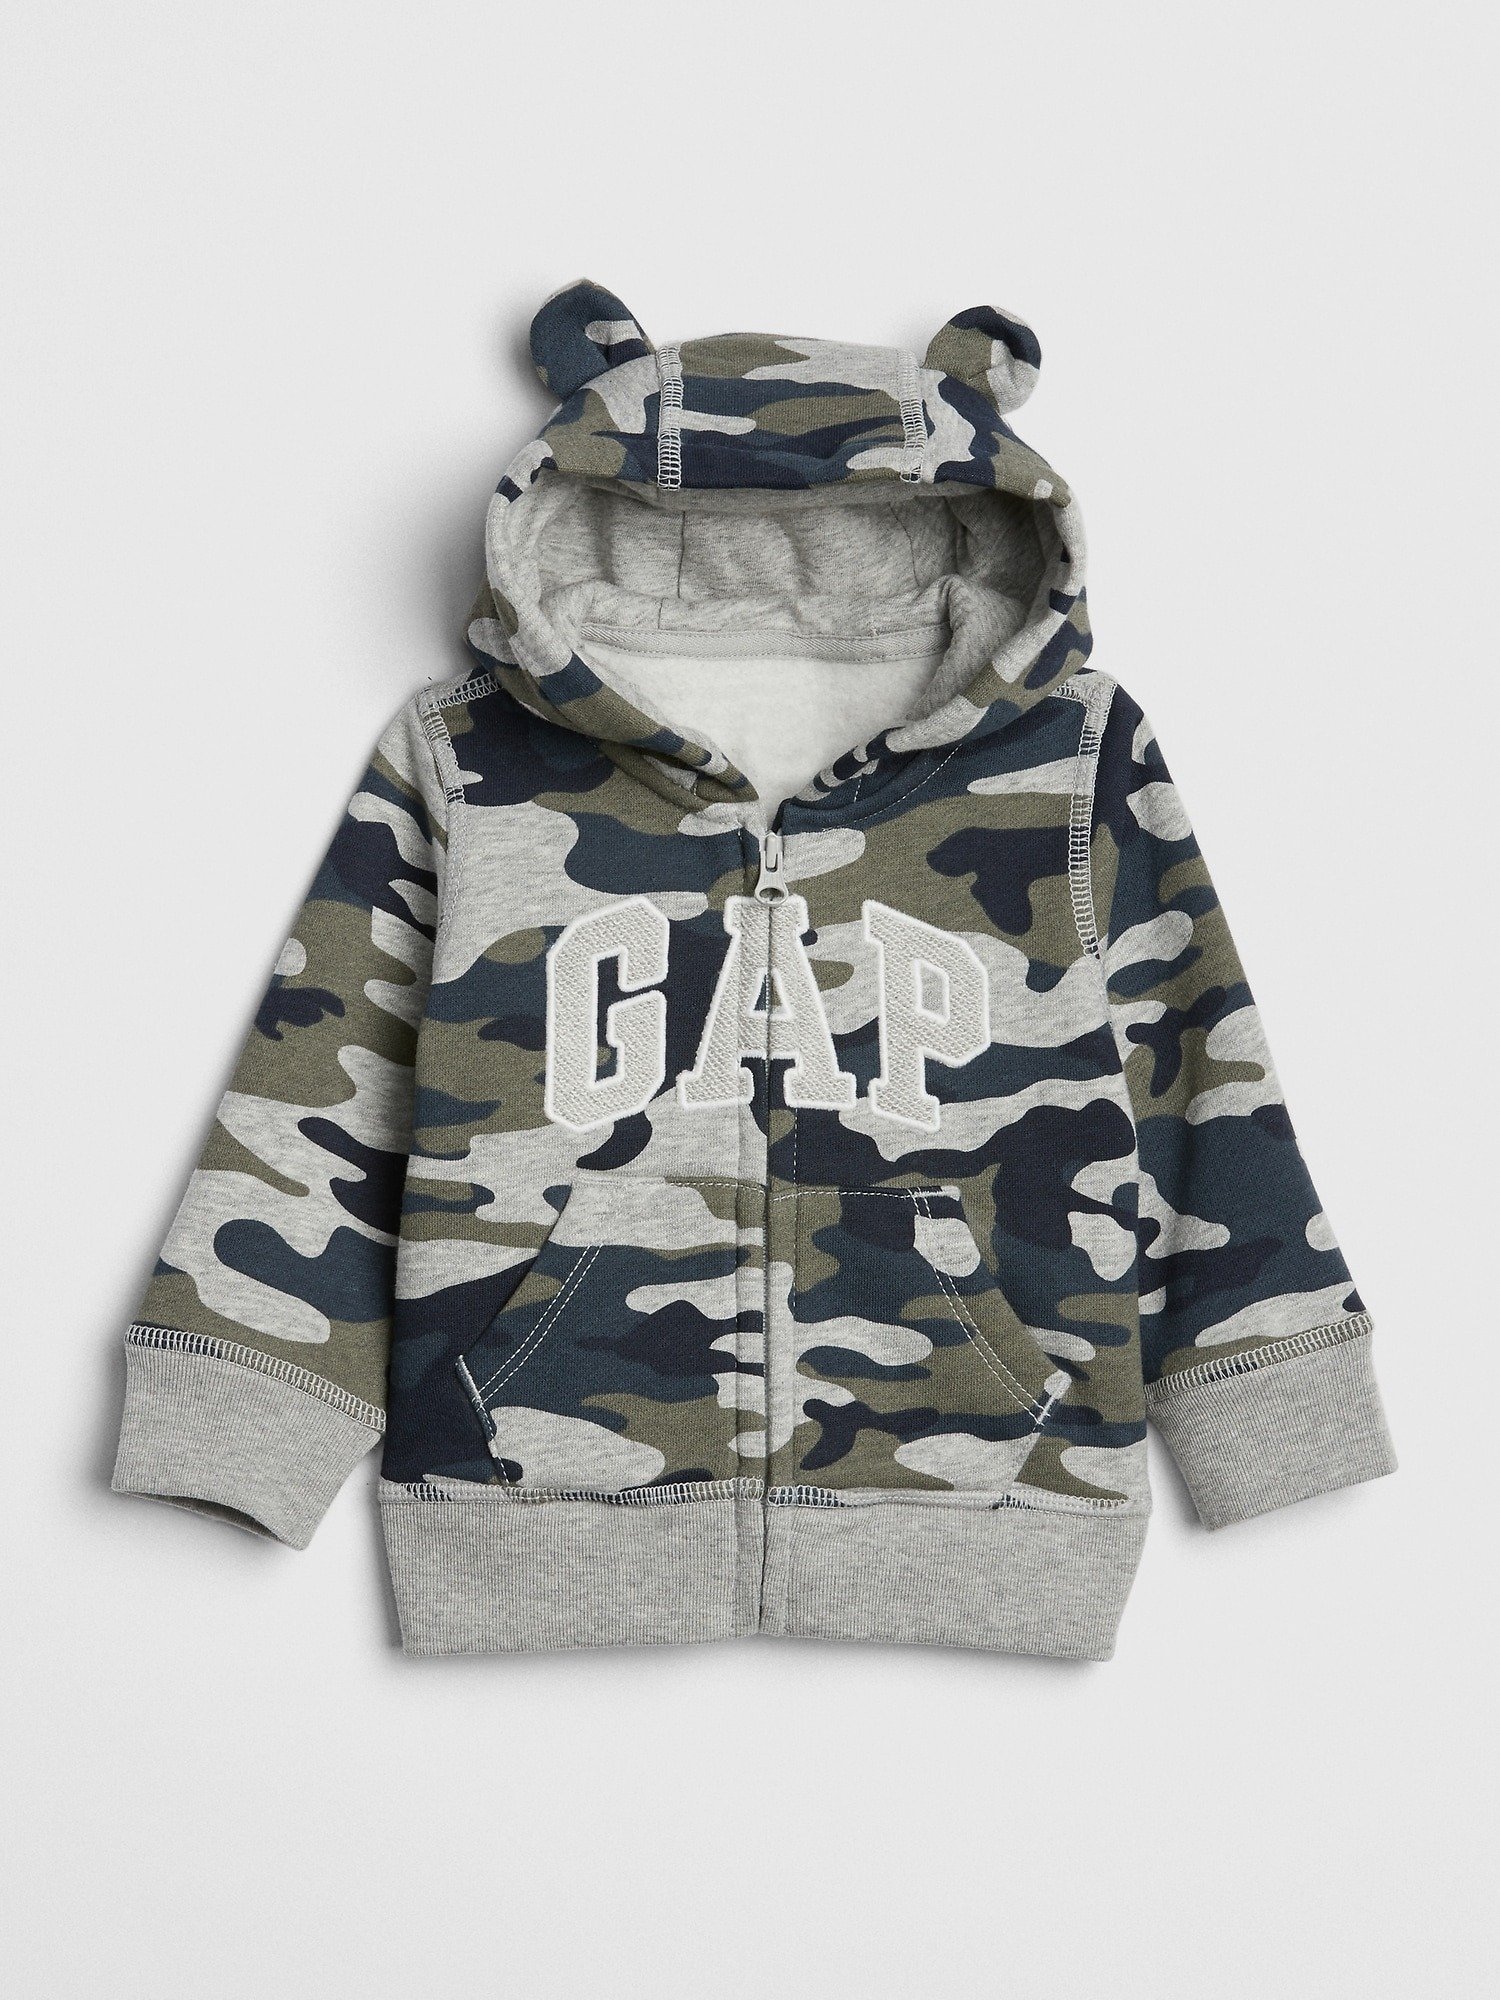 Gap Logo Kapüşonlu Sweatshirt product image